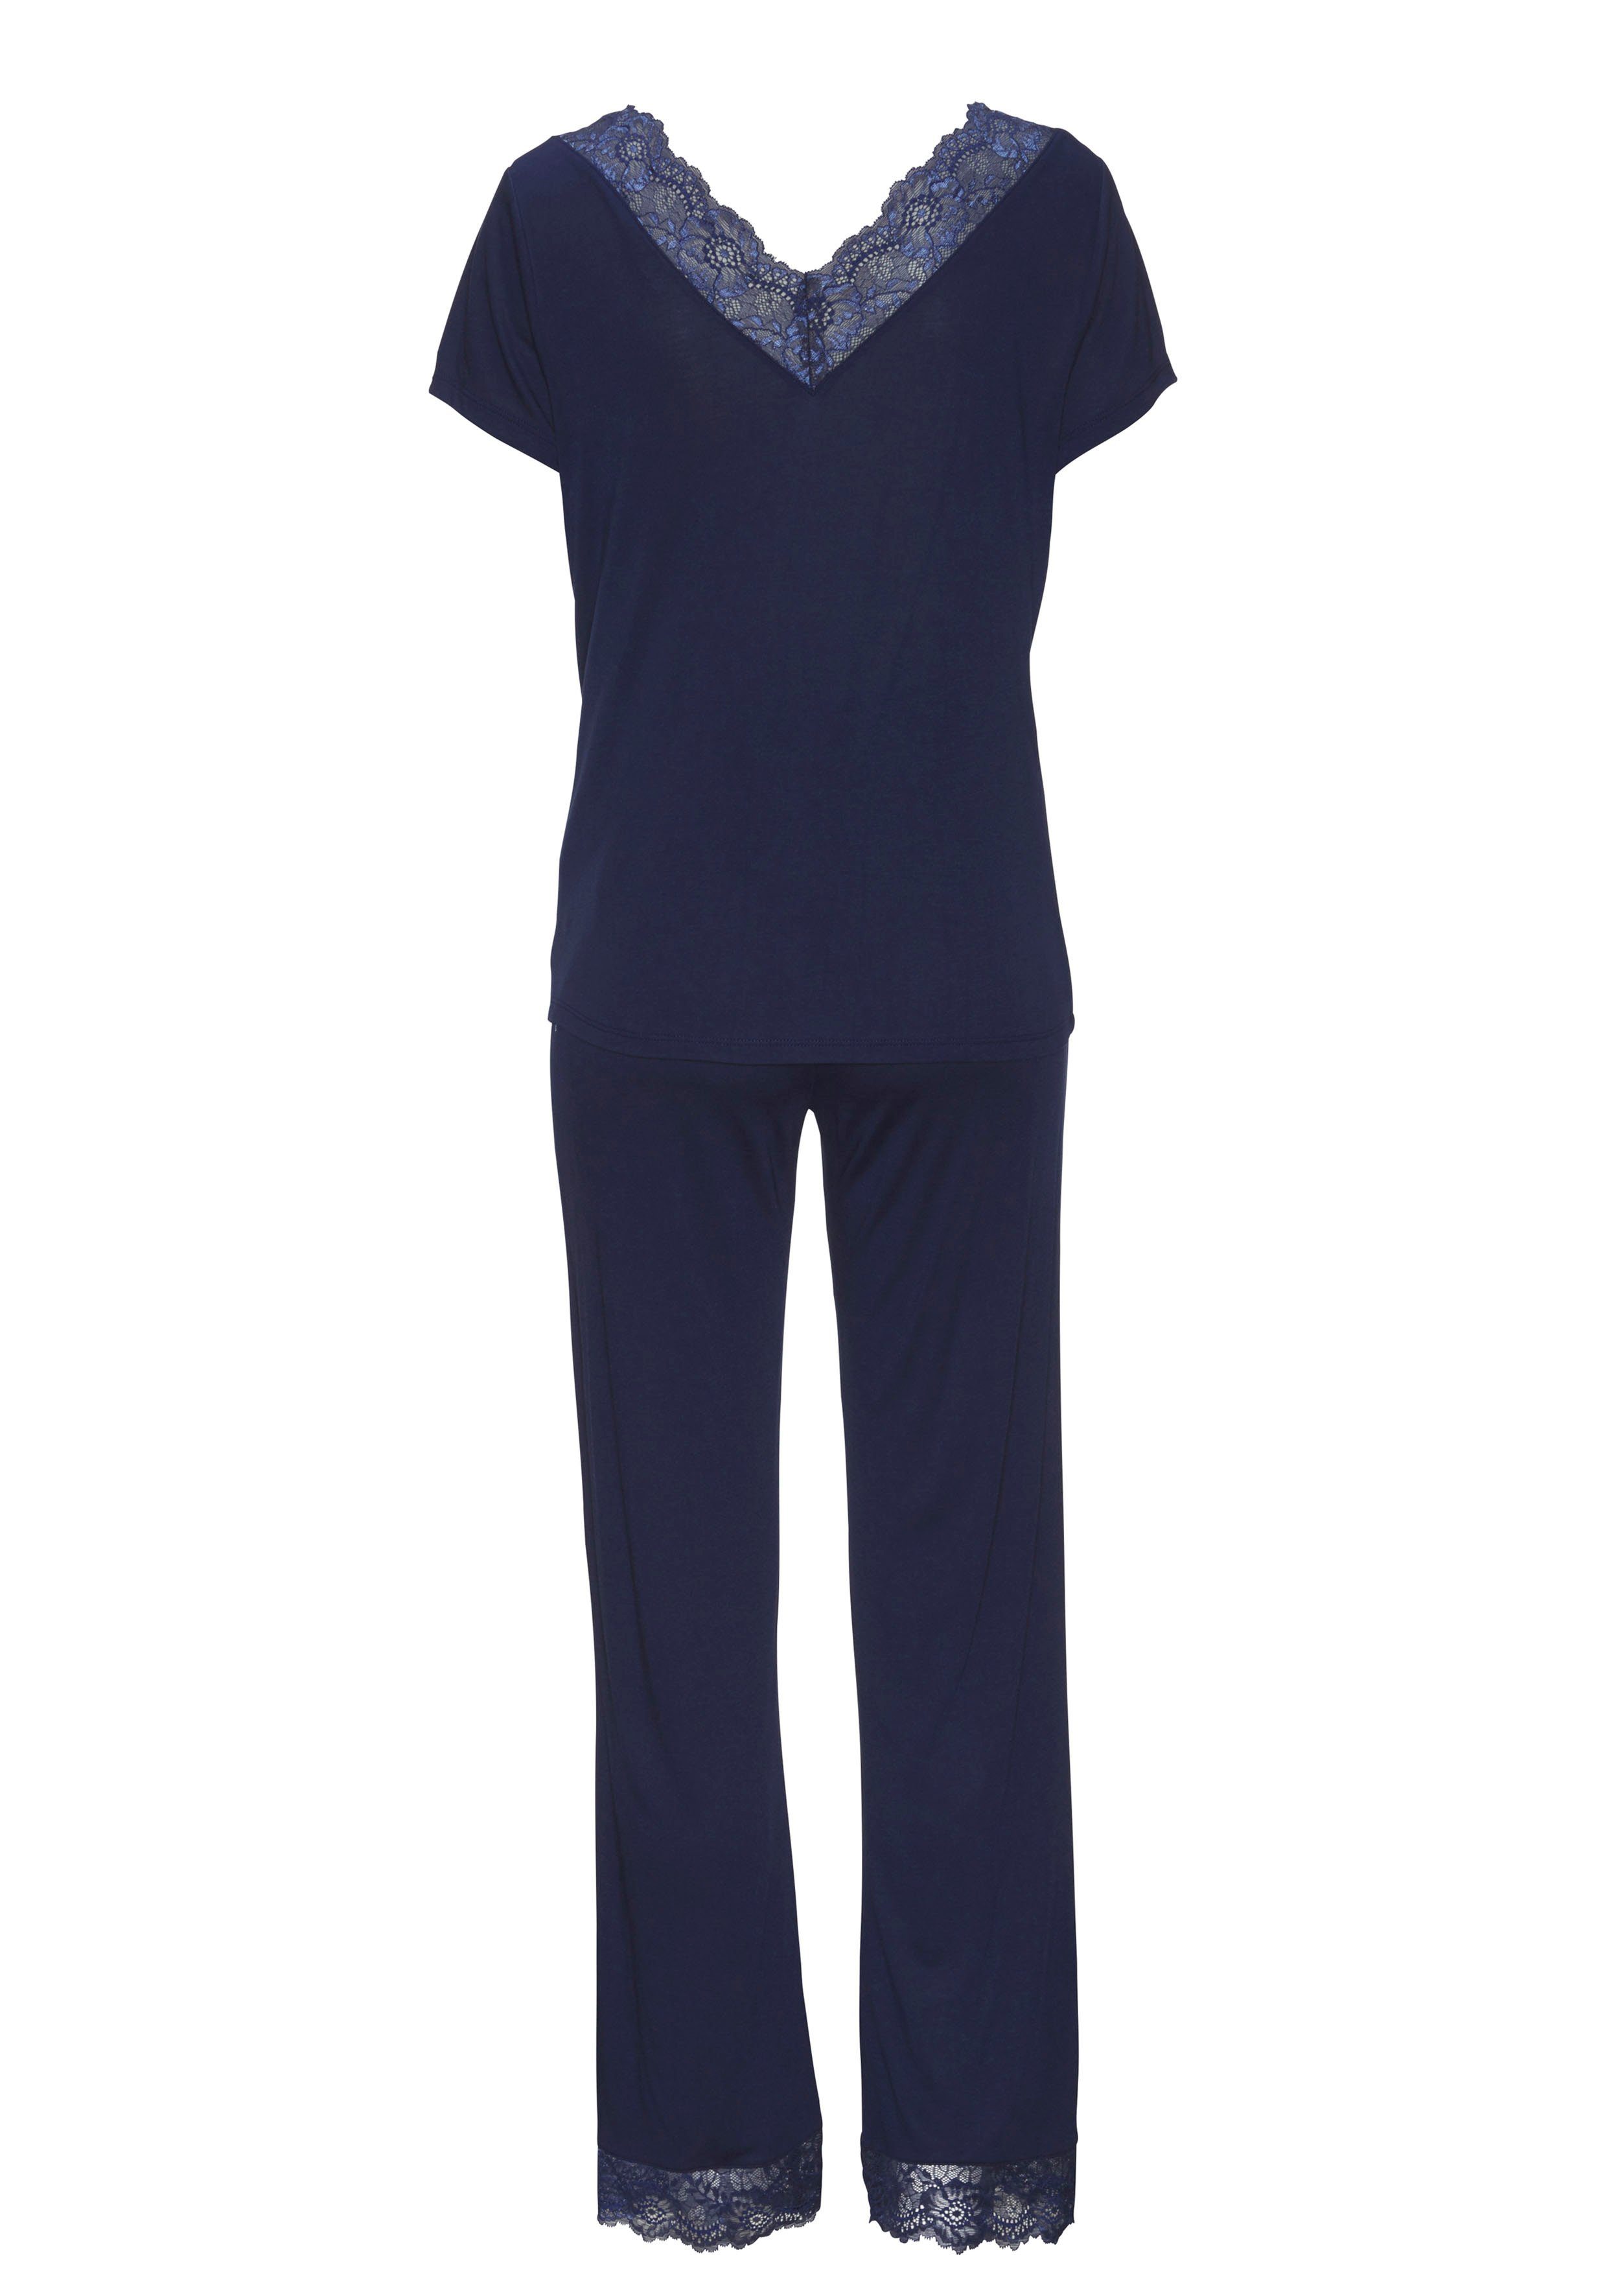 LASCANA Pyjama mit Stück) Spitzendetails 1 (2 nachtblau tlg